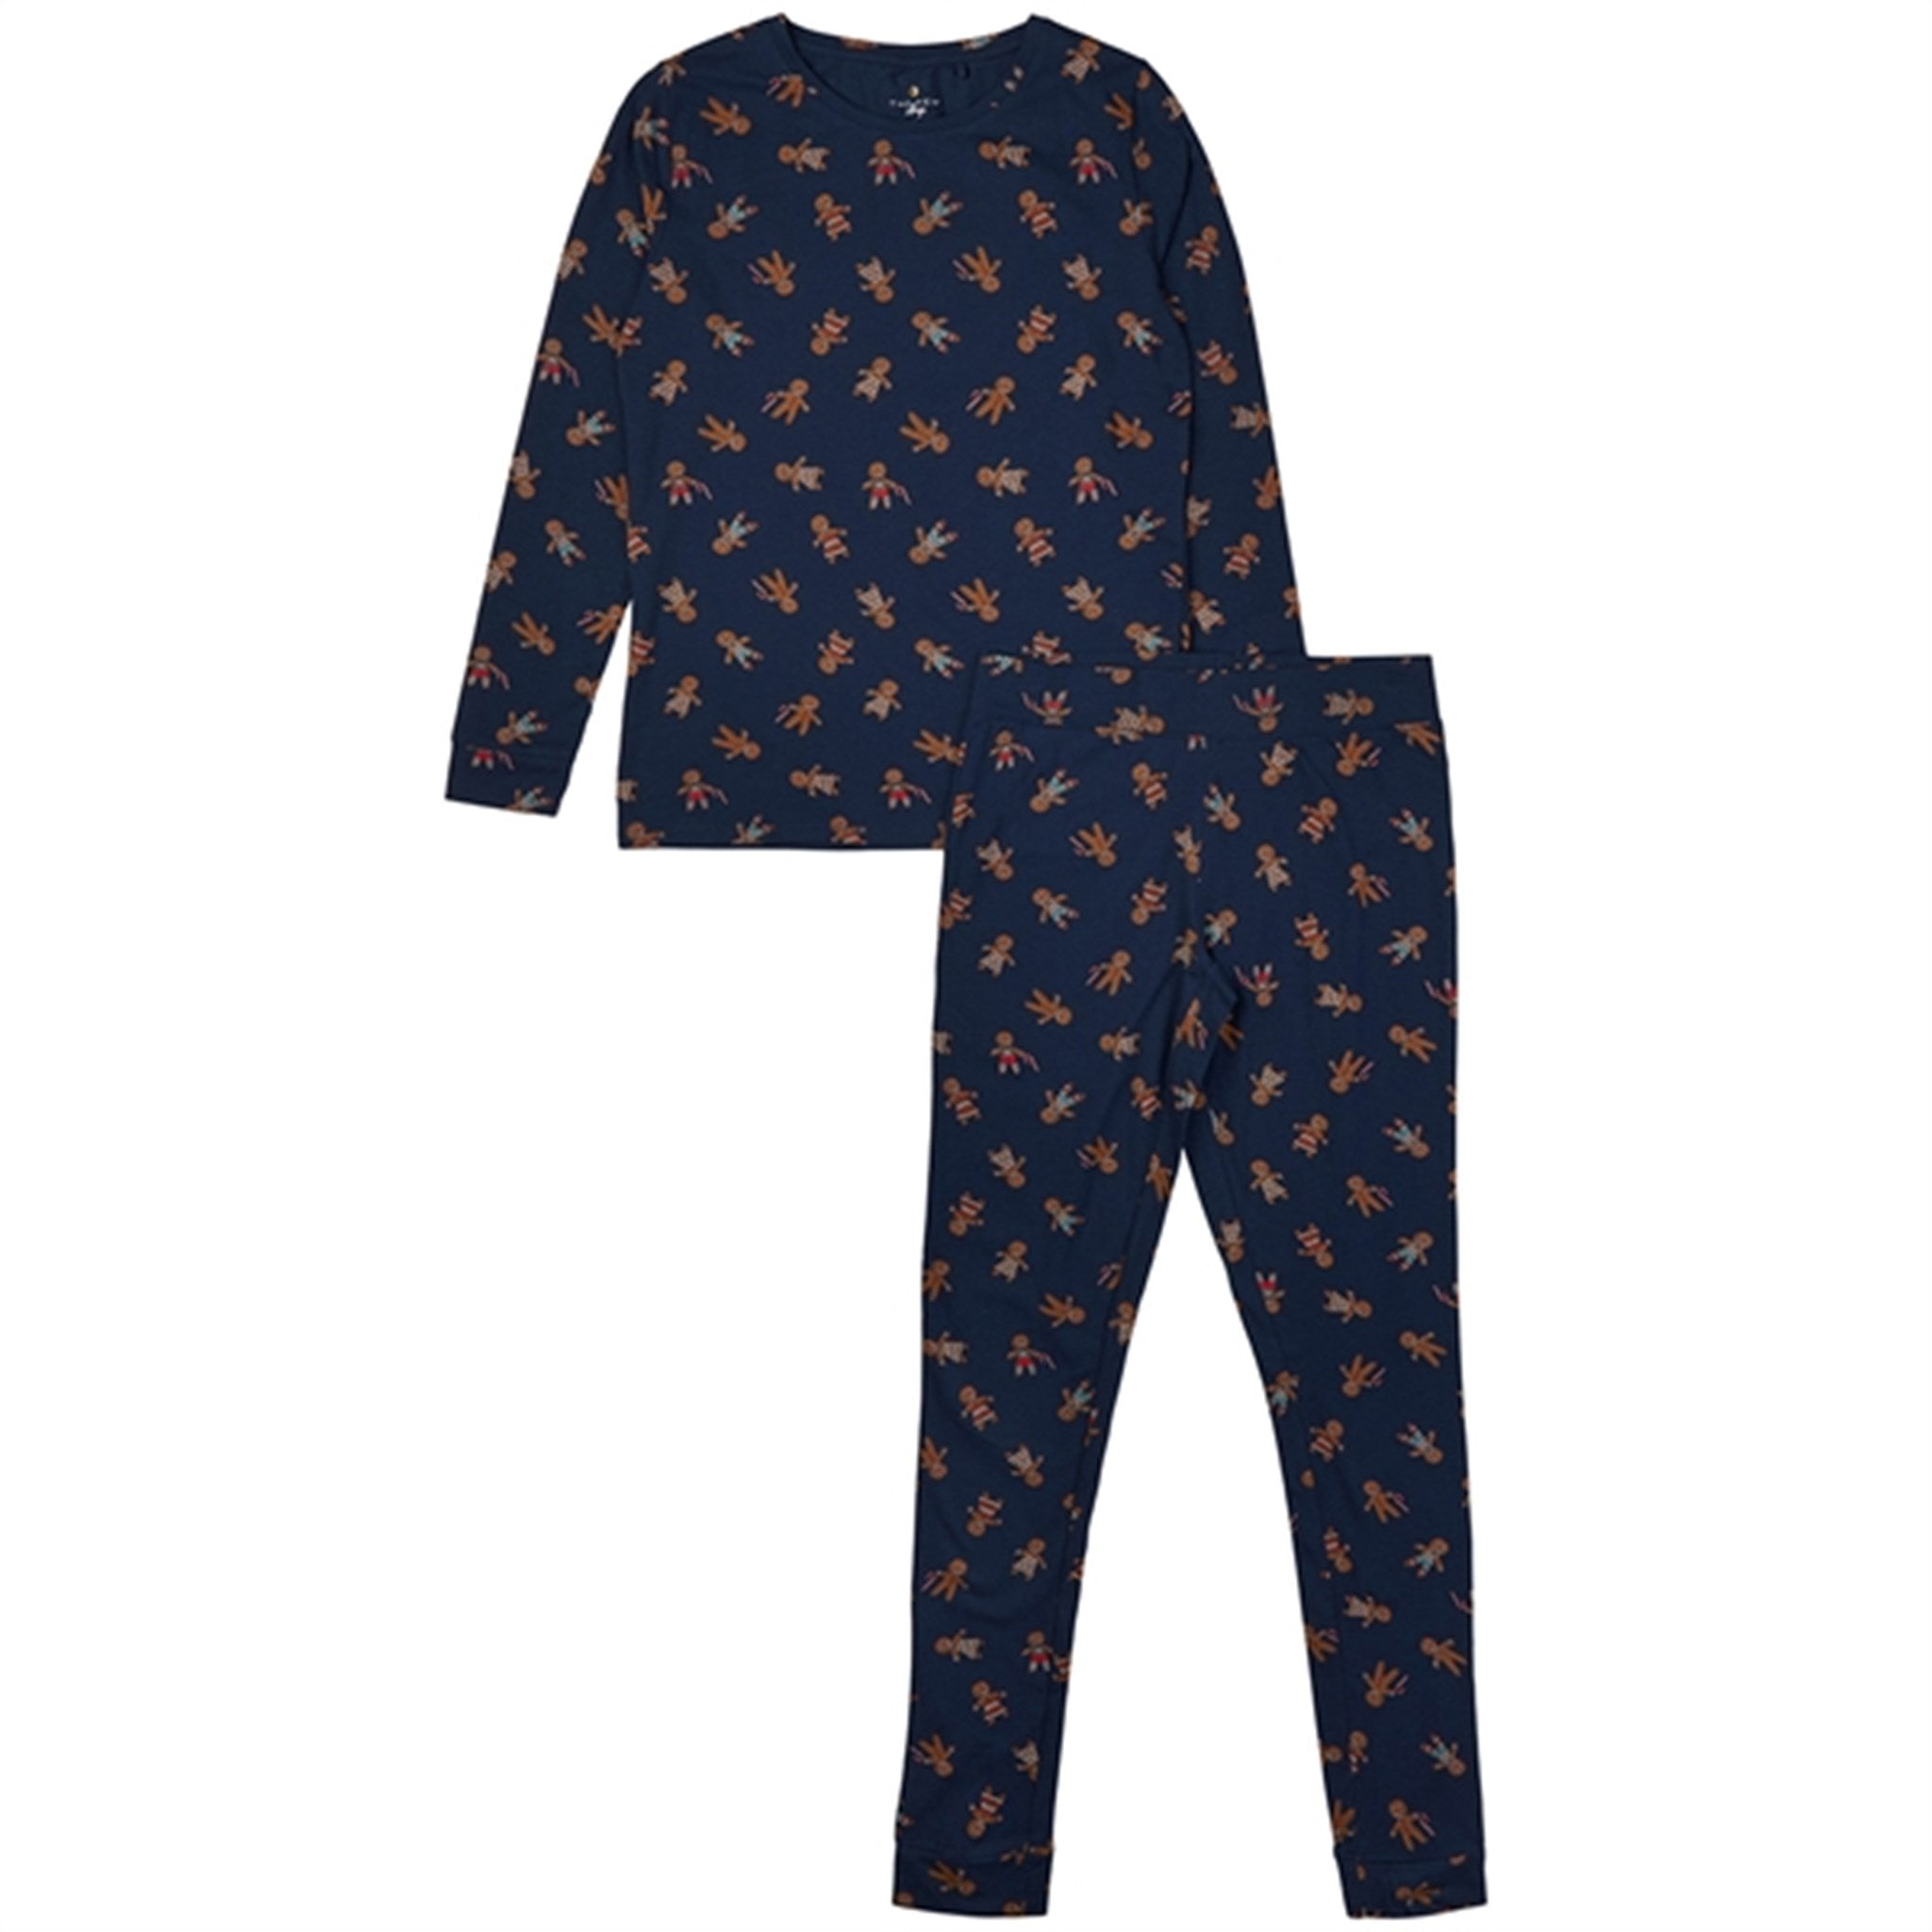 The New Navy Blazer Ginger Aop Holiday Pyjamas Adult